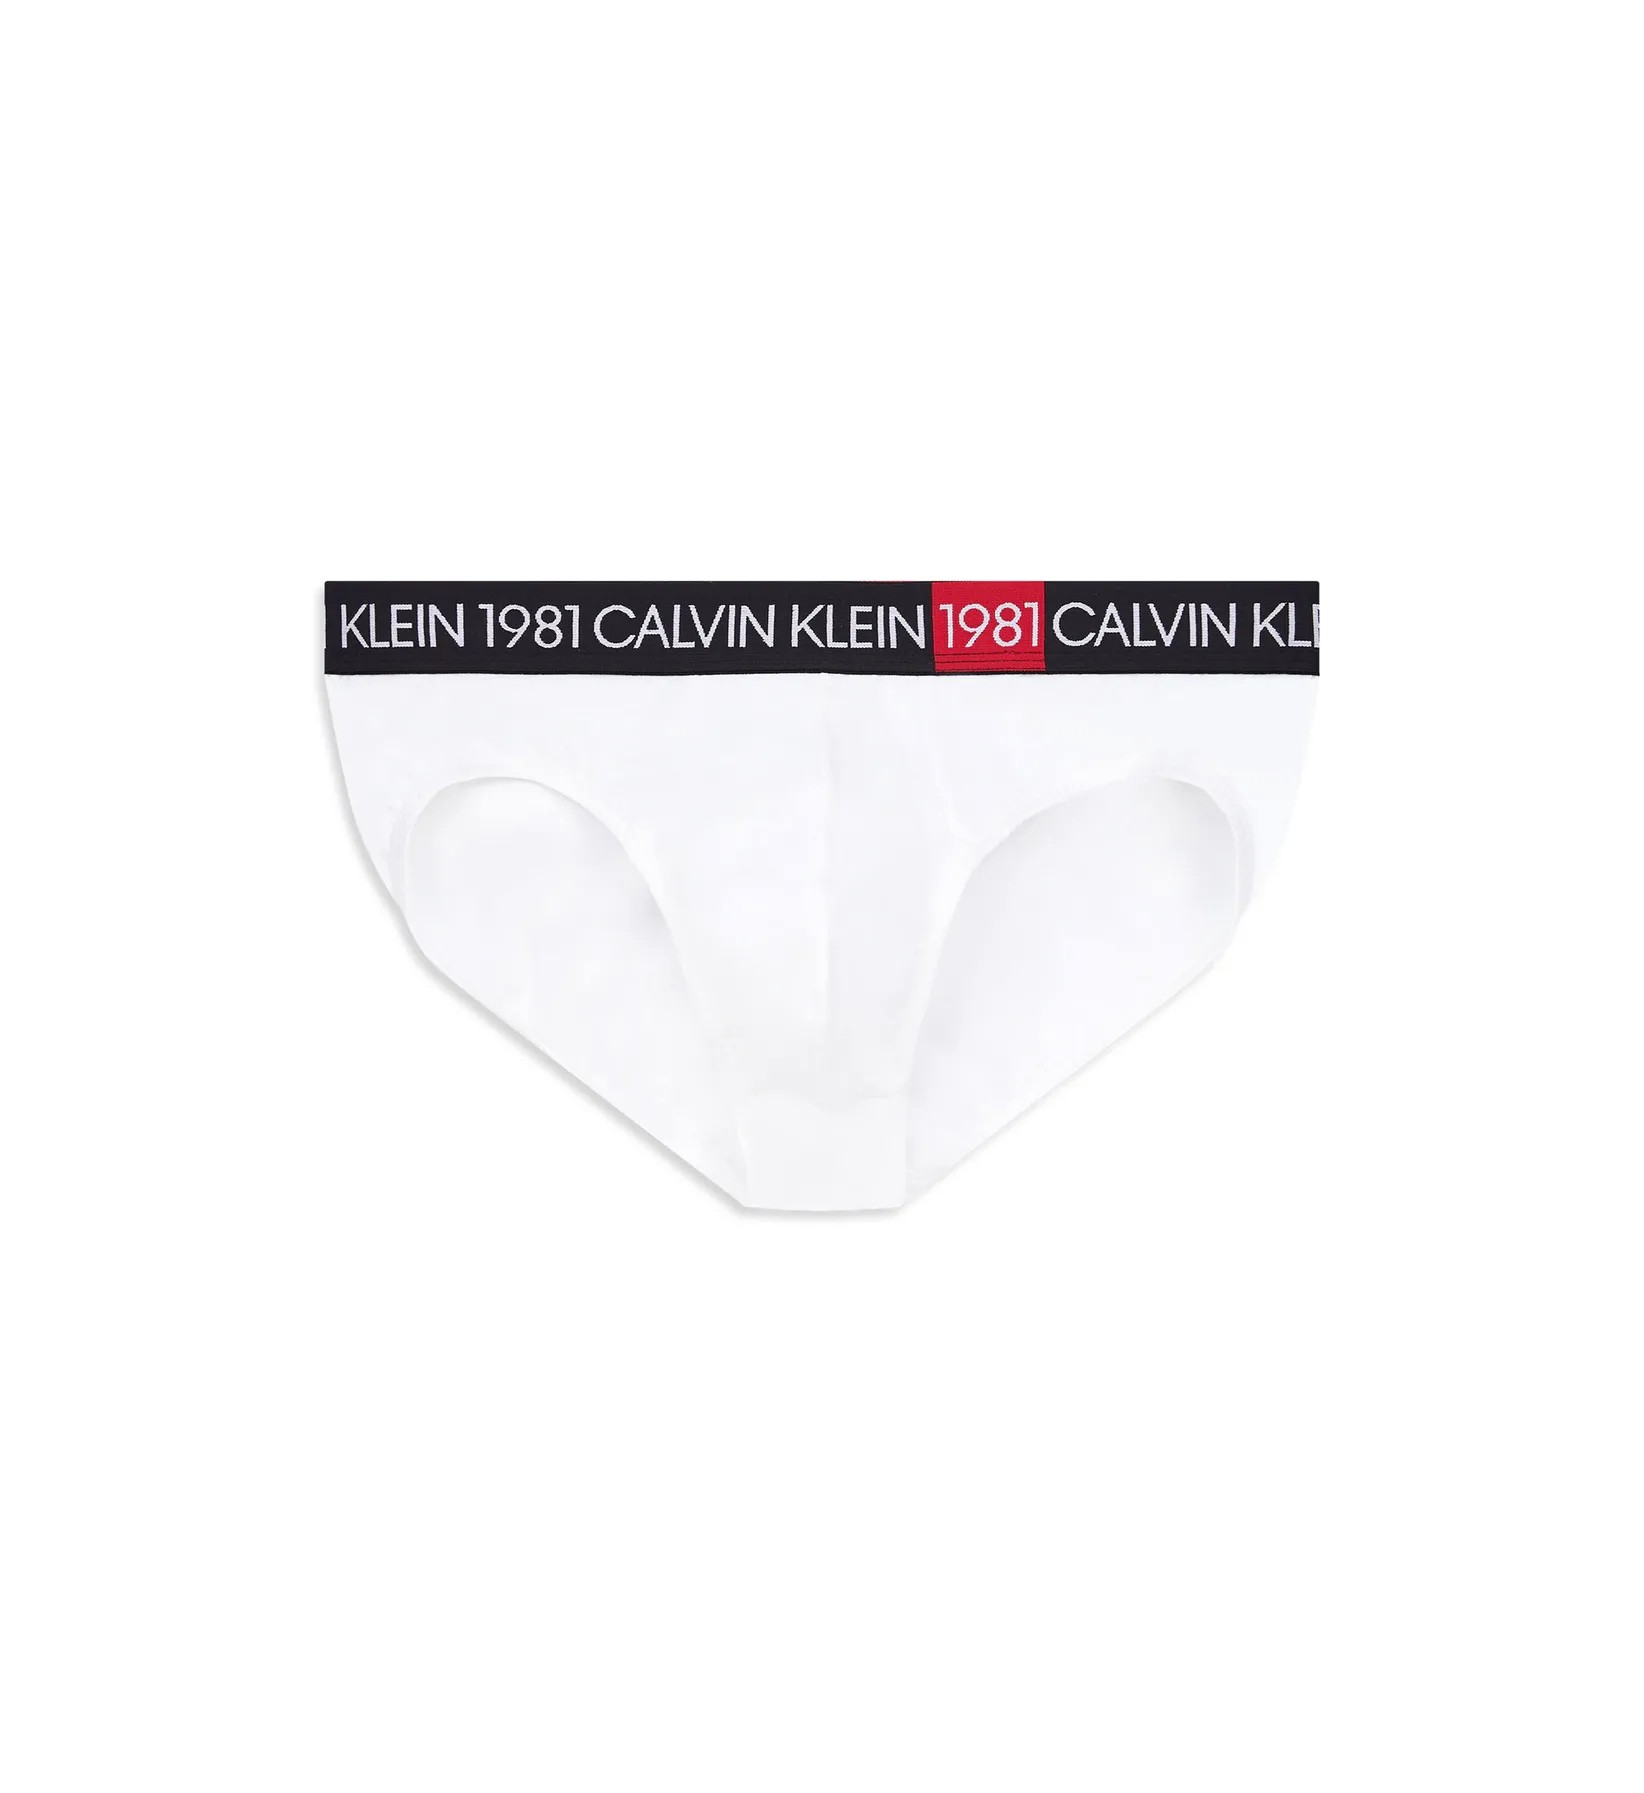 Calvin Klein Trunks NB2049 100 White - New Collection Autumn Winter 2019 - 2020